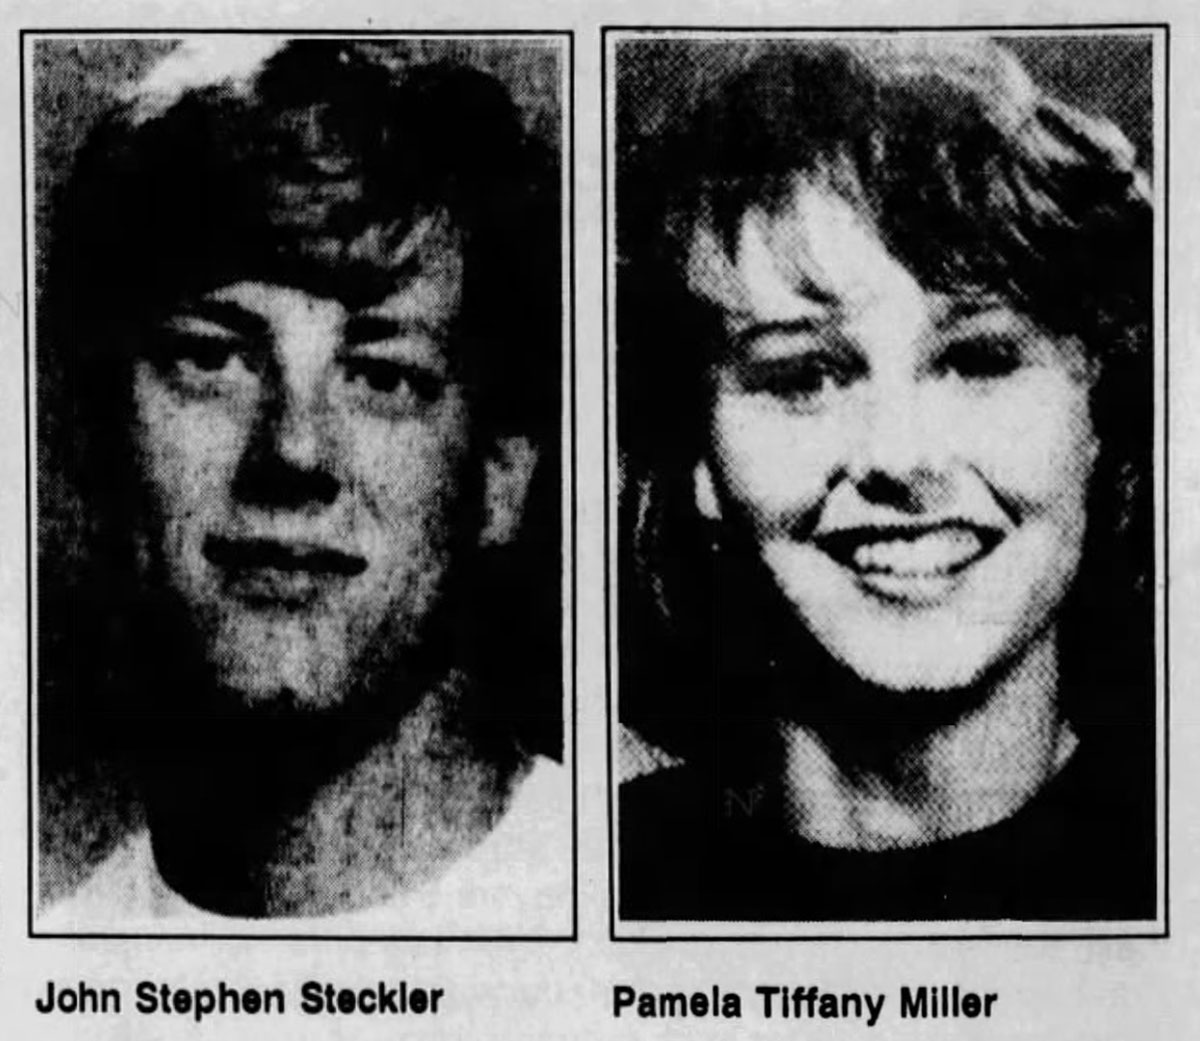 A scan of photos of John Stephen Steckler and Pamela Tiffany Miller